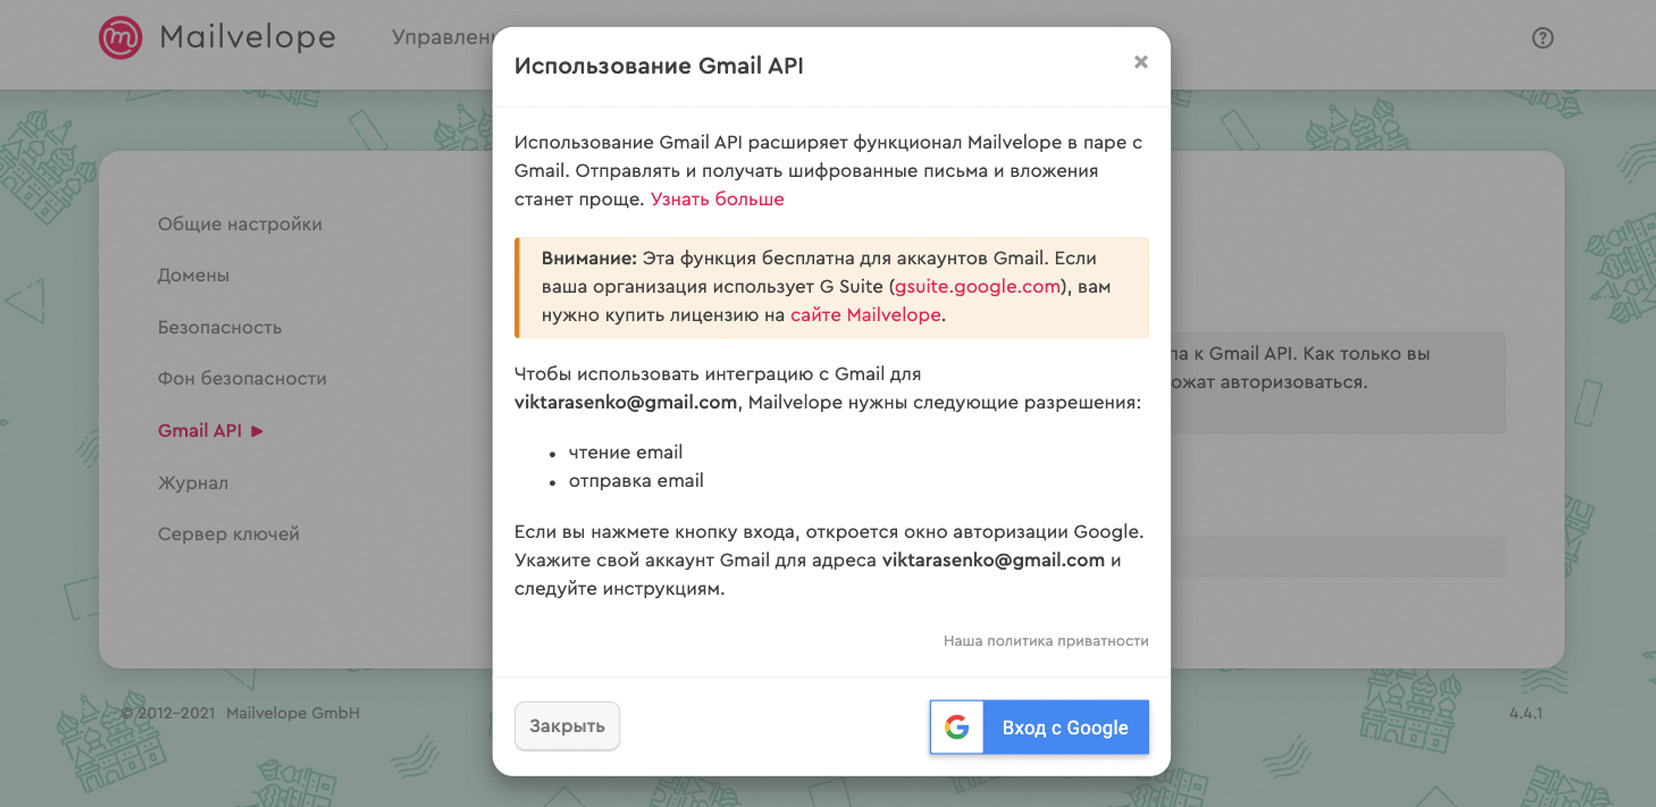 Gmail API Notification Prompt